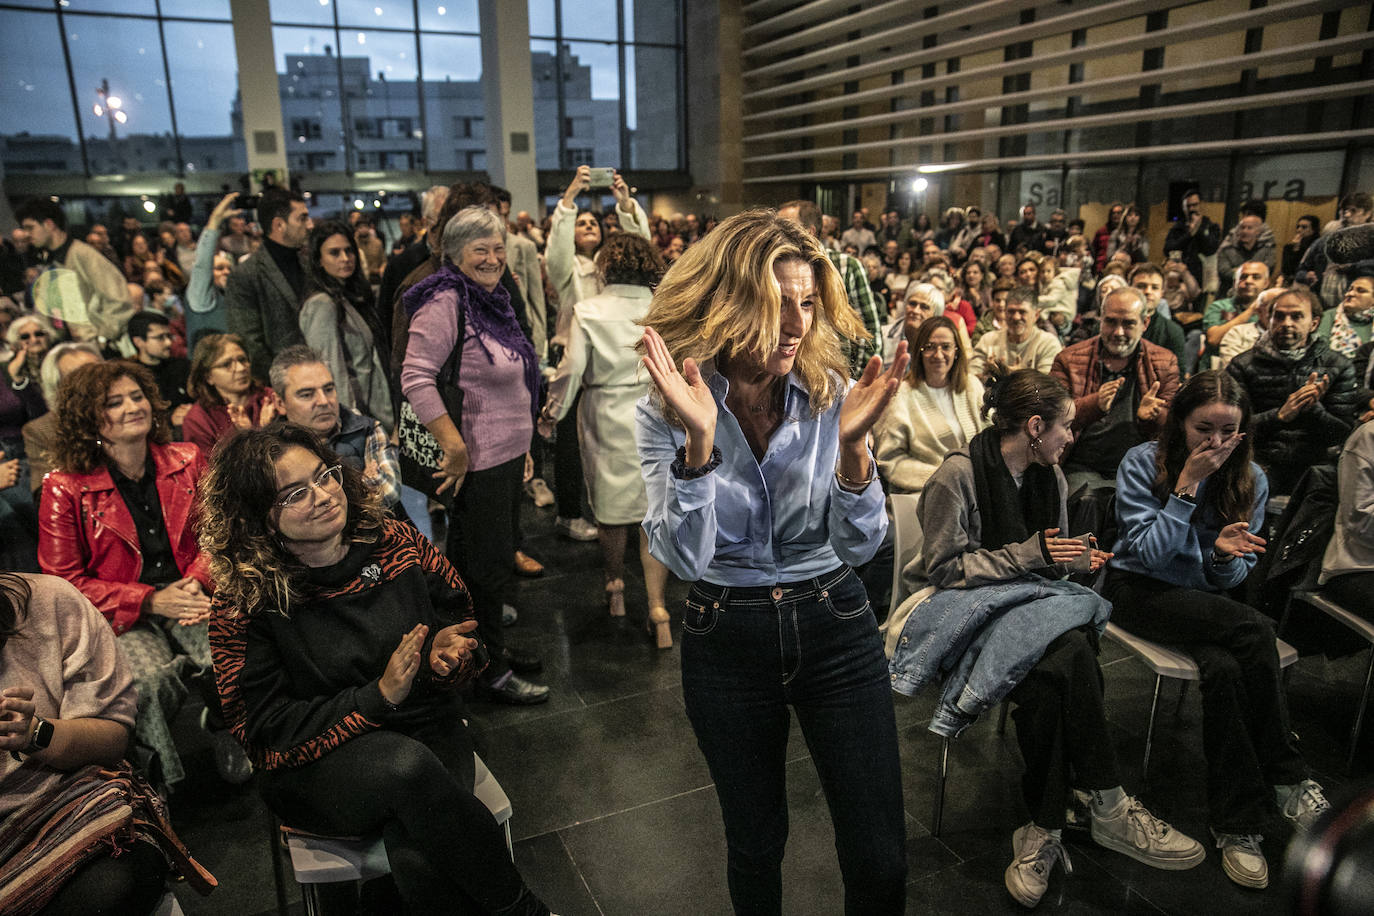 Fotos: Yolanda Díaz presenta Sumar en Logroño